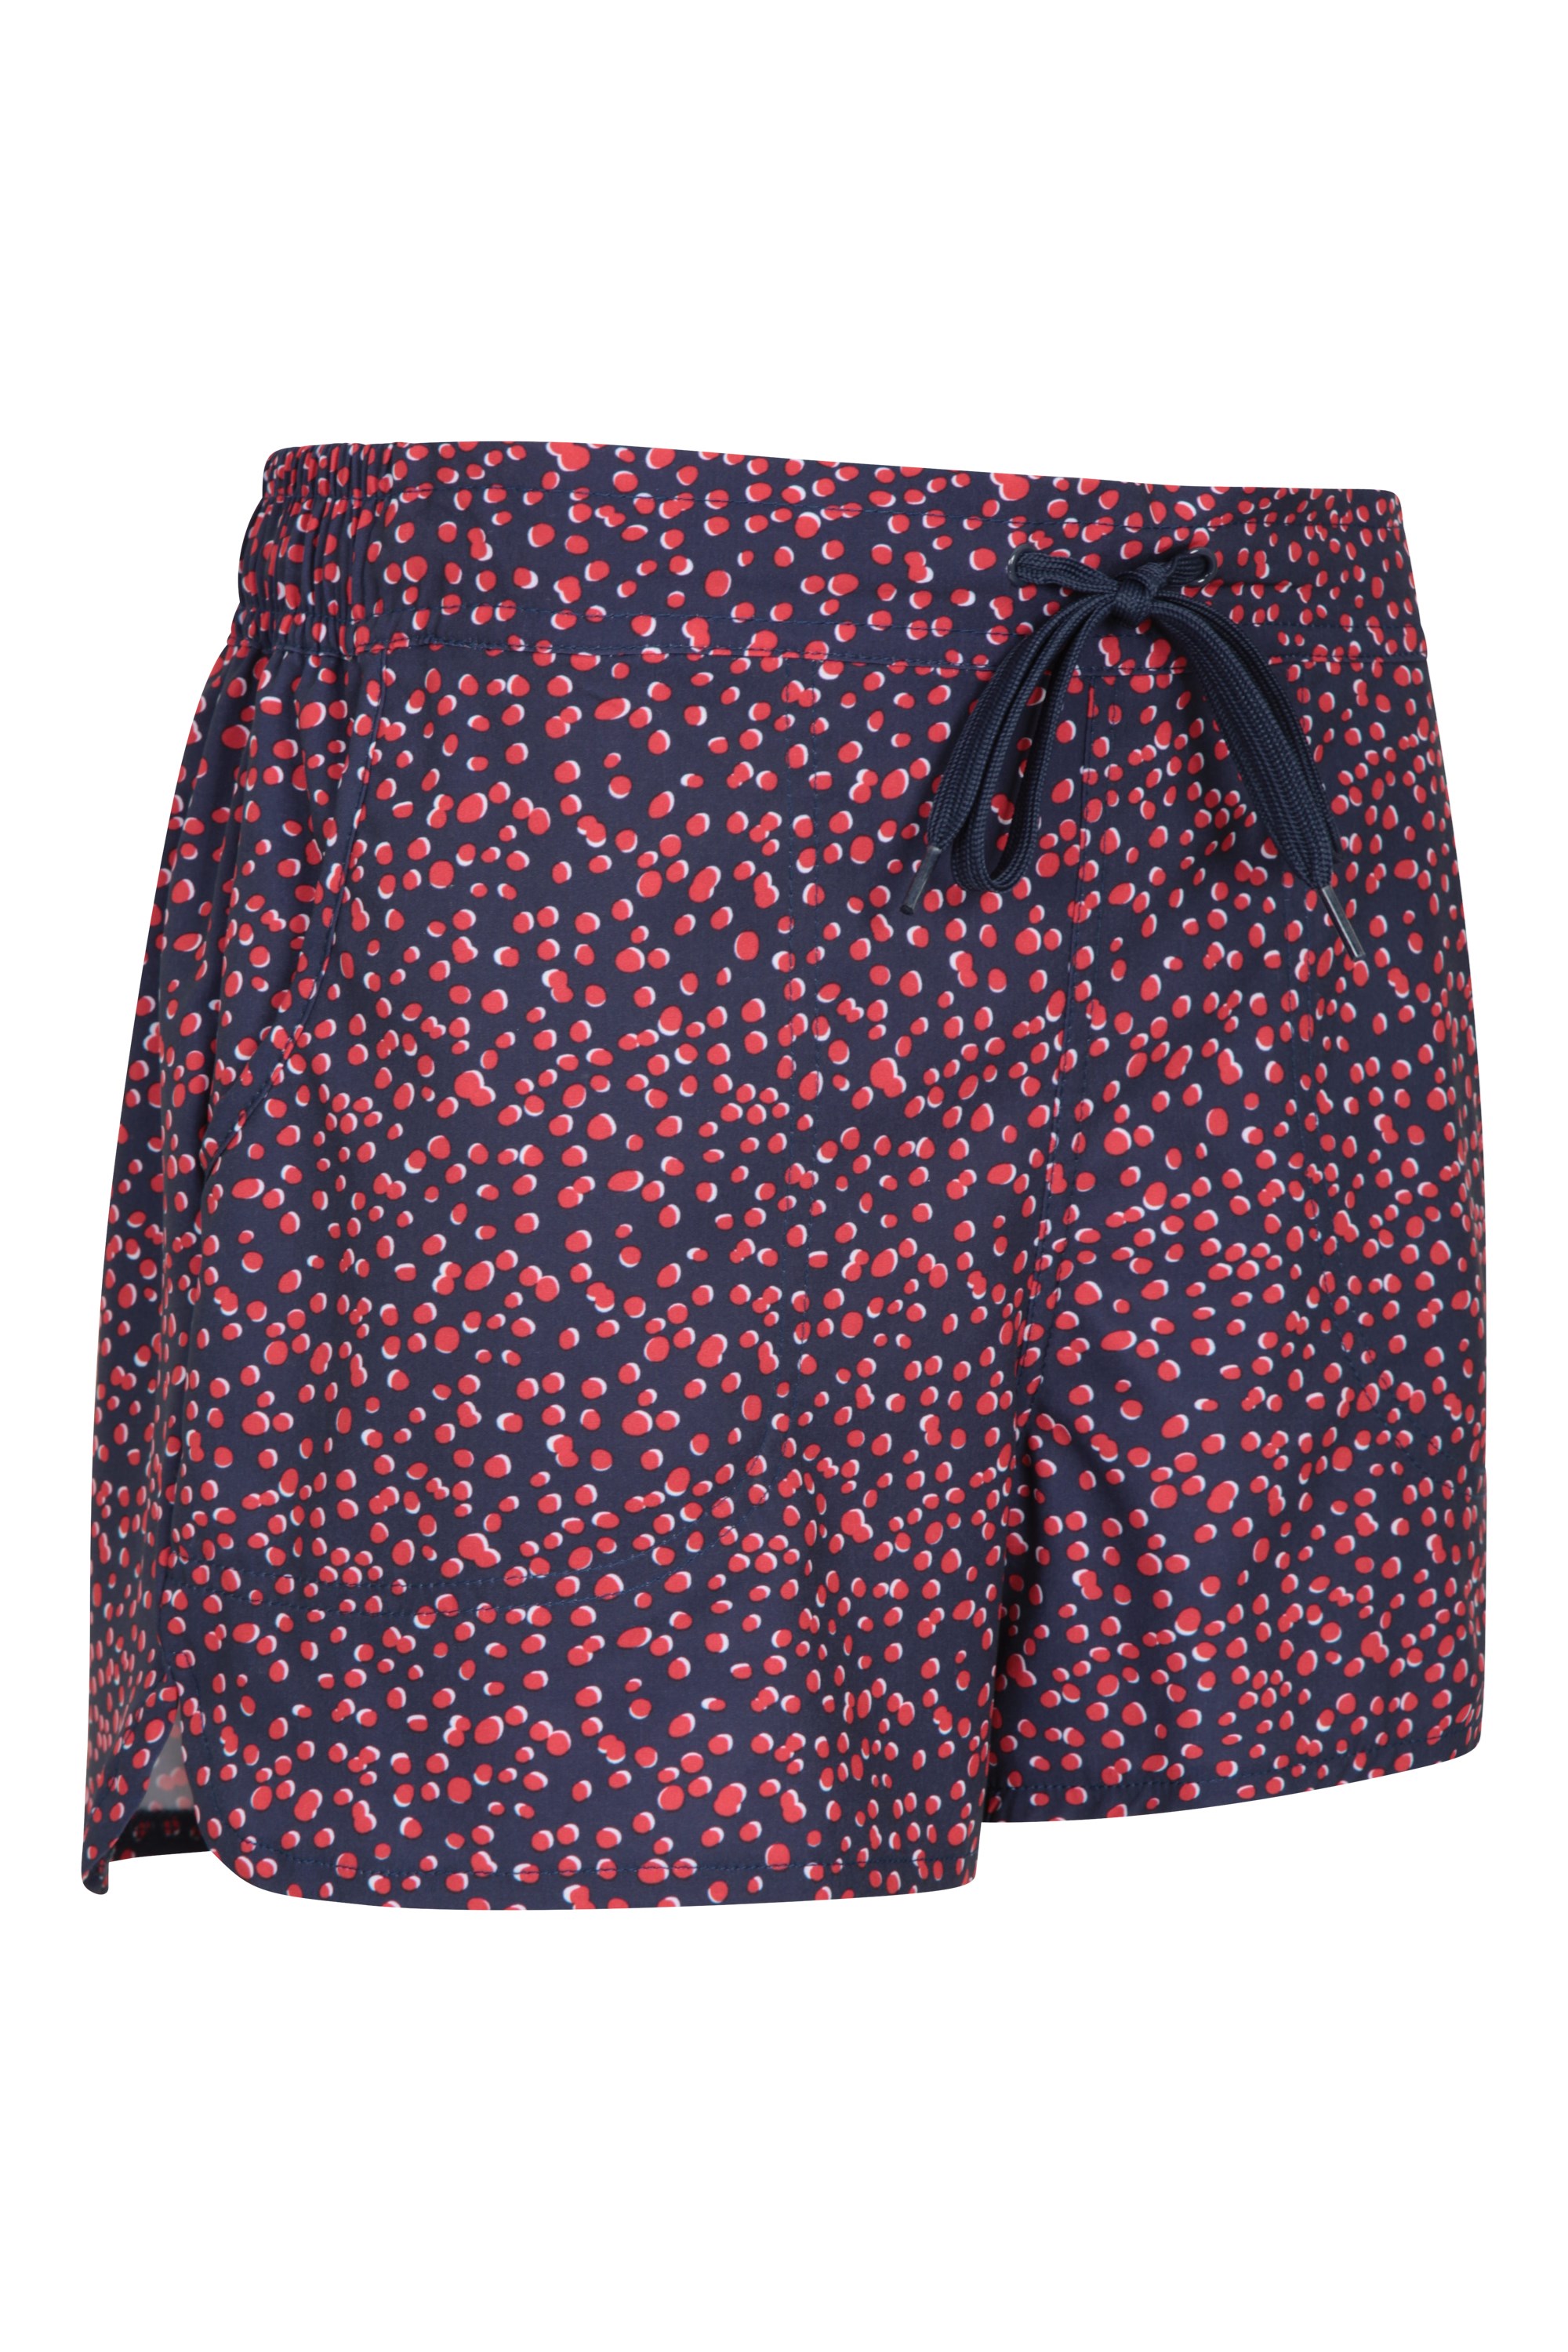 Women Casual Shorts Ladies Print Boardshorts Swimming Workout Pants Summer Holiday Essential Beachwear BaojunHT® 